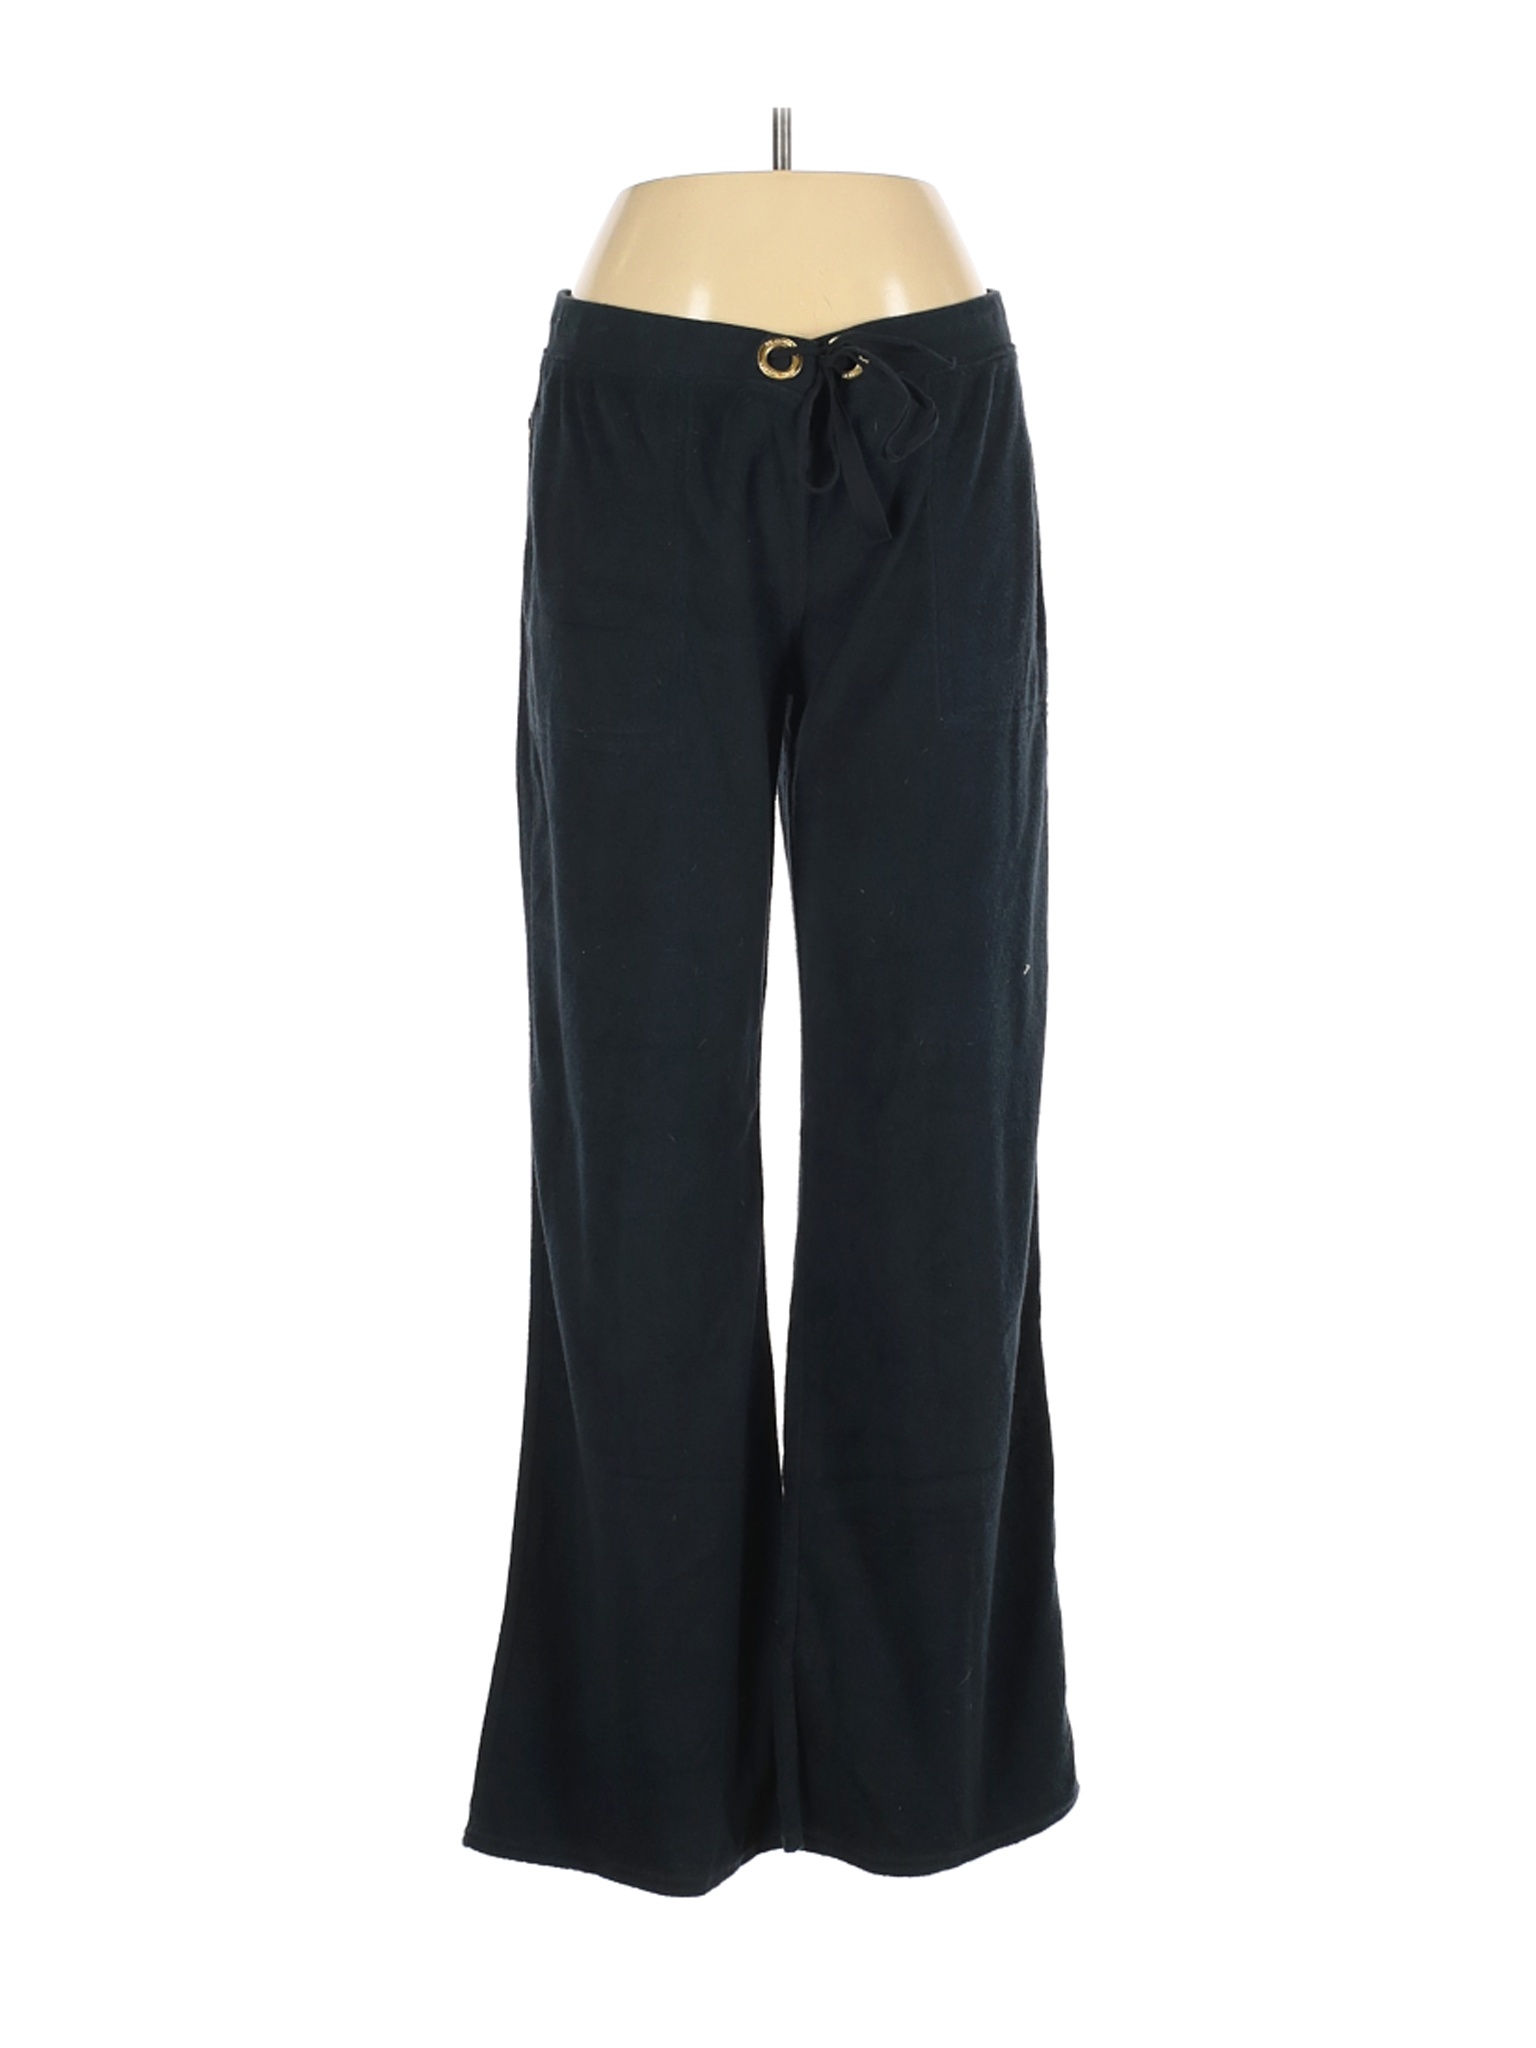 MICHAEL Michael Kors Women Black Casual Pants L | eBay